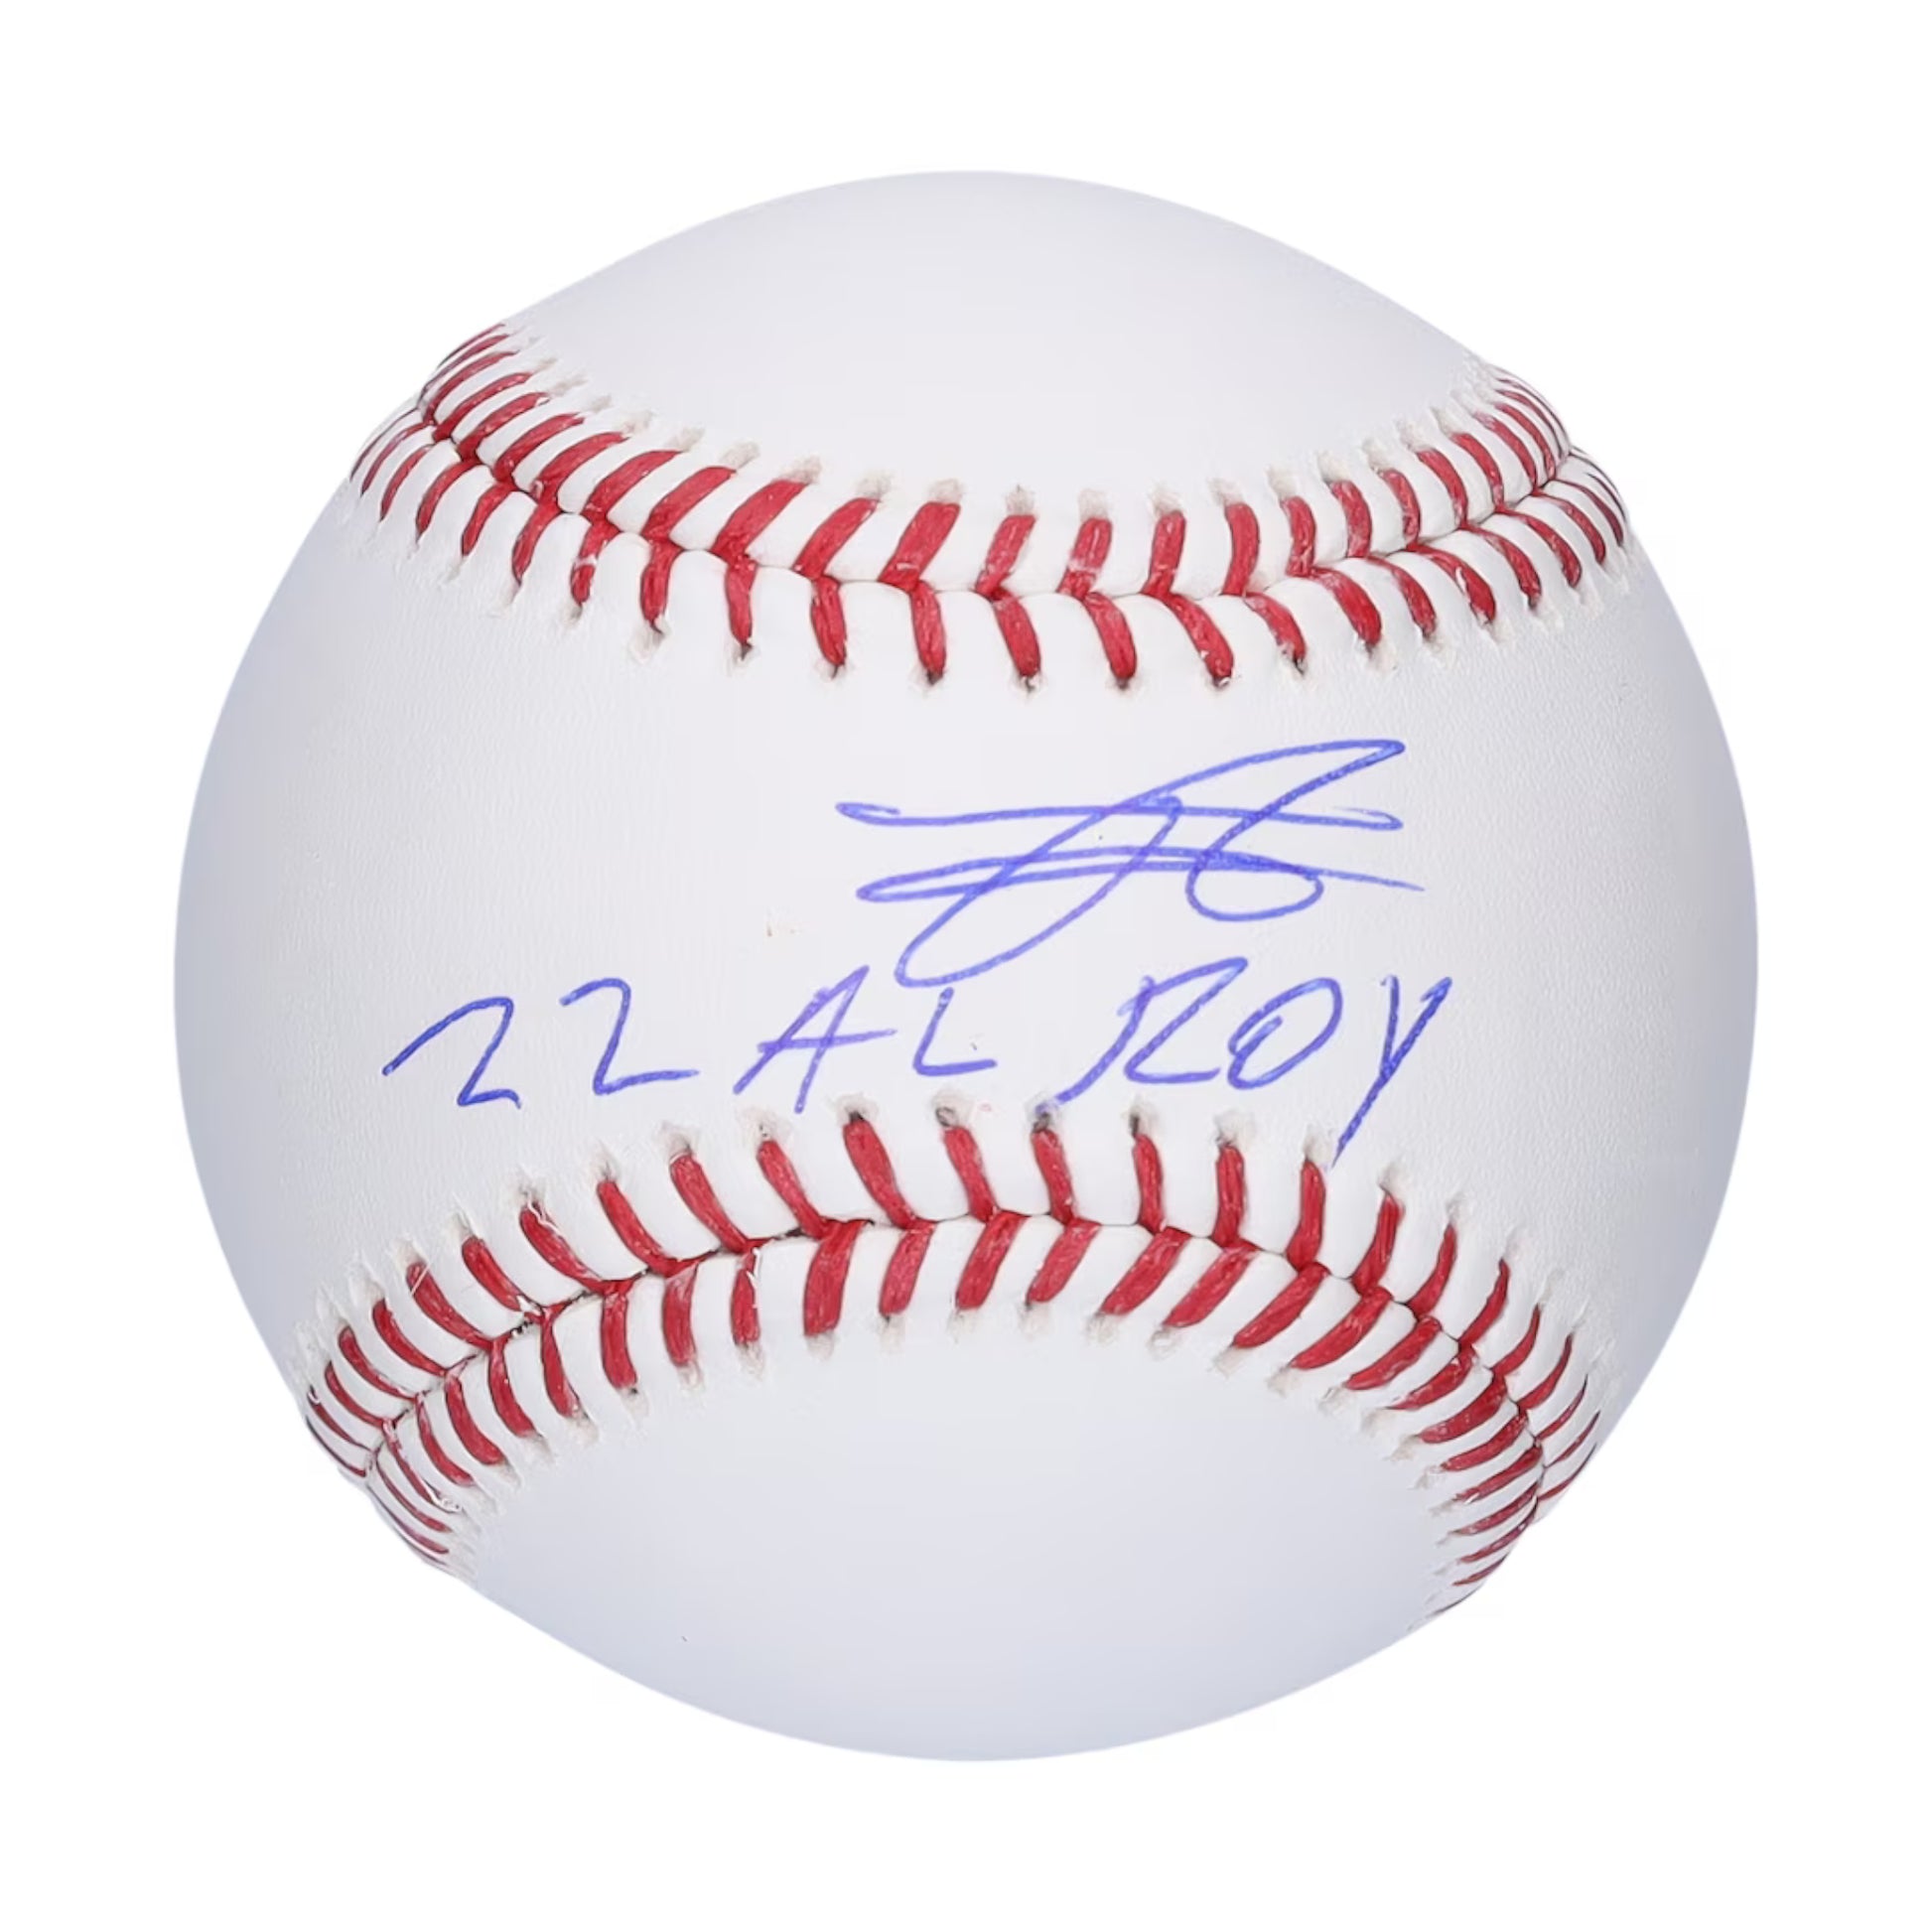 Julio Rodriguez Autographed "22 AL ROY" Rawlings Official MLB Baseball